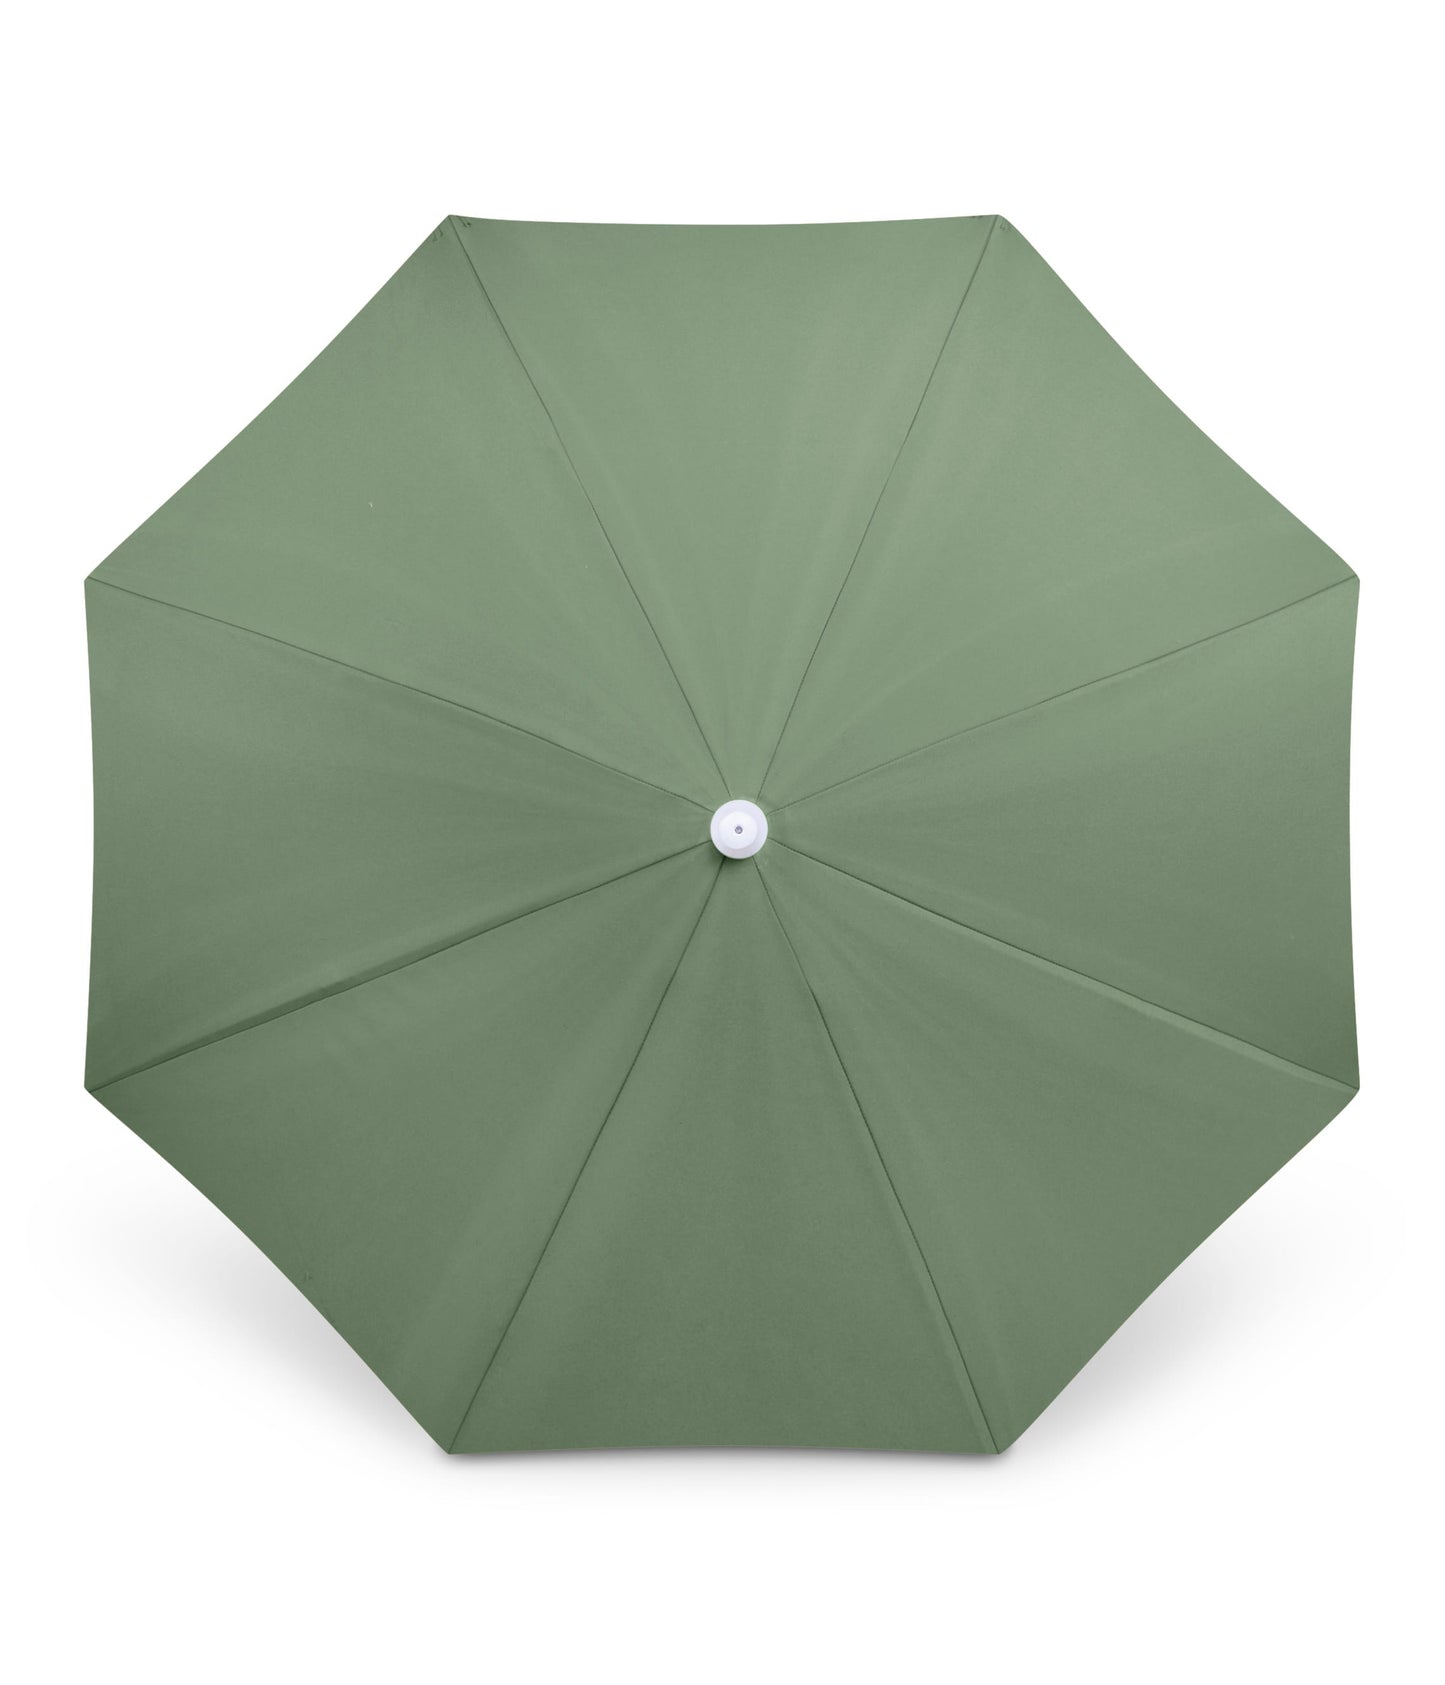 Tallow Beach Umbrella